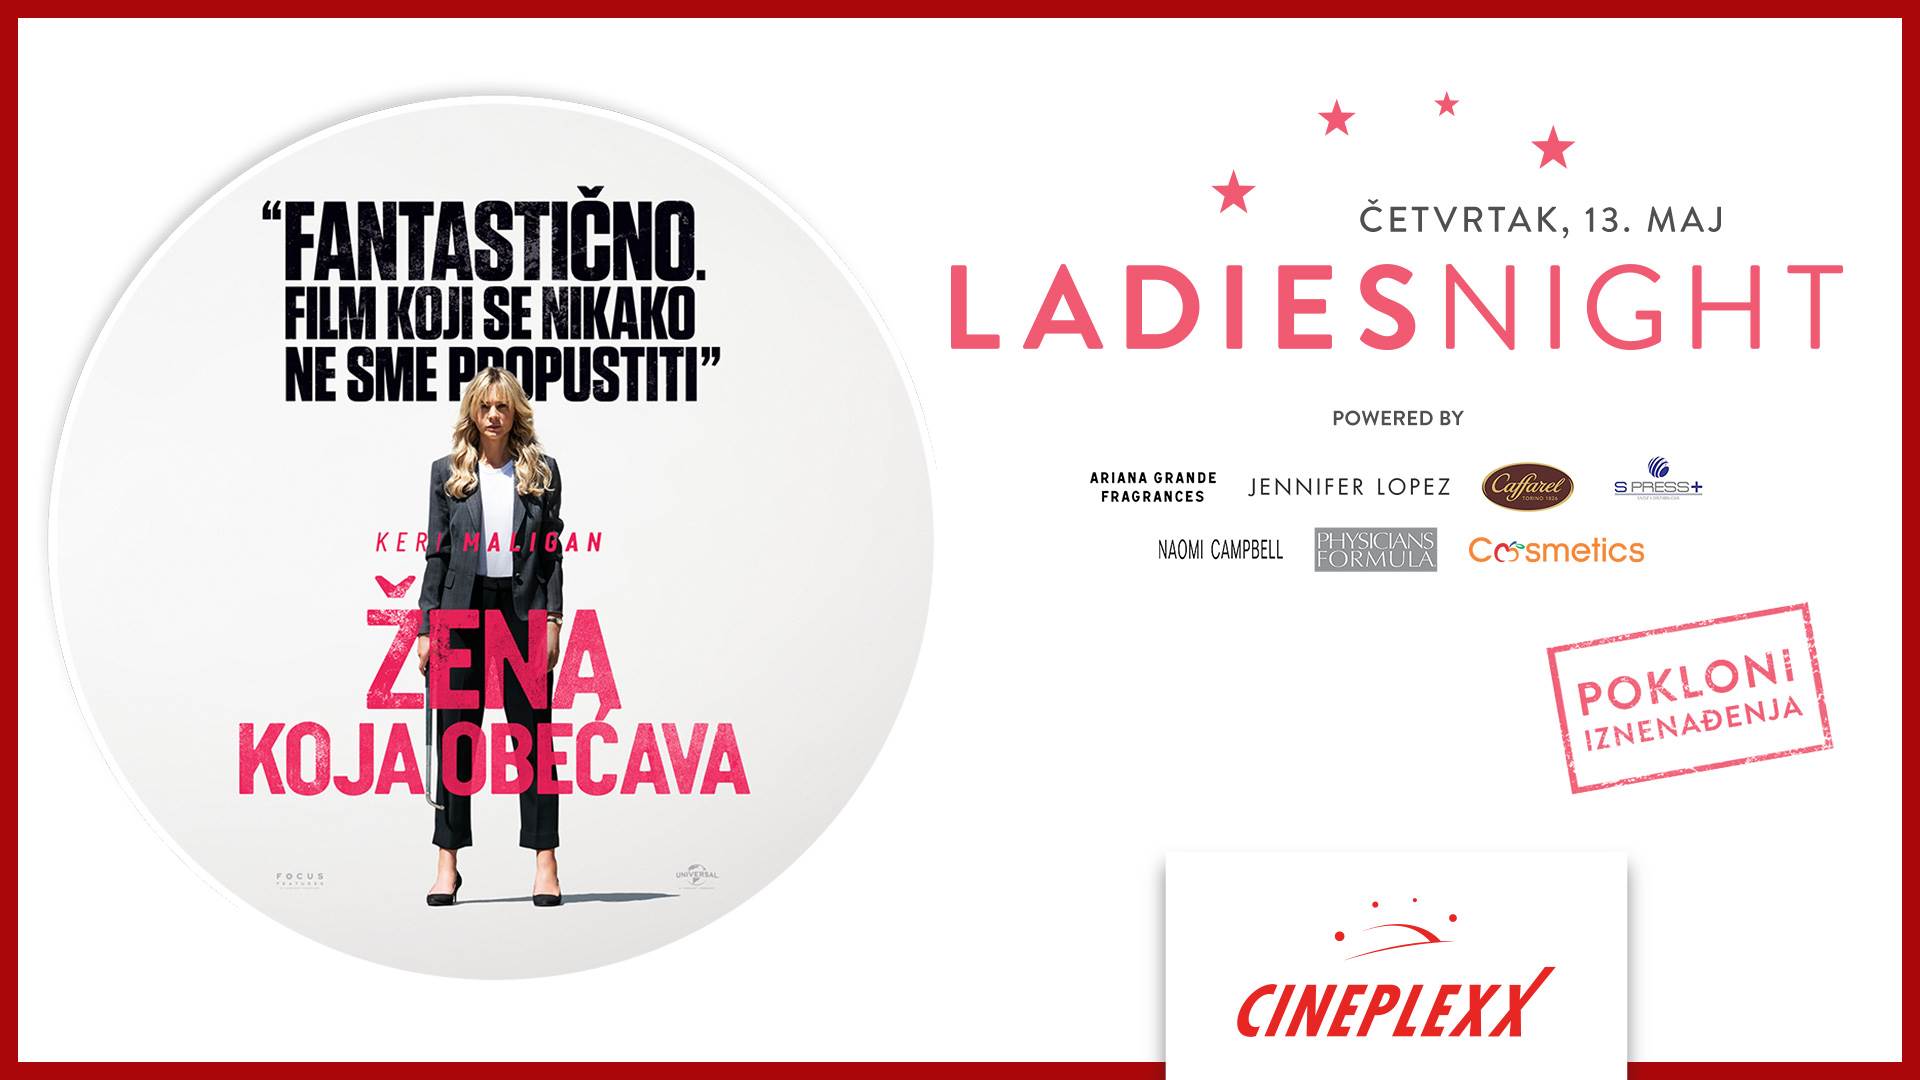  Ladies Night bioskop cineplexx 